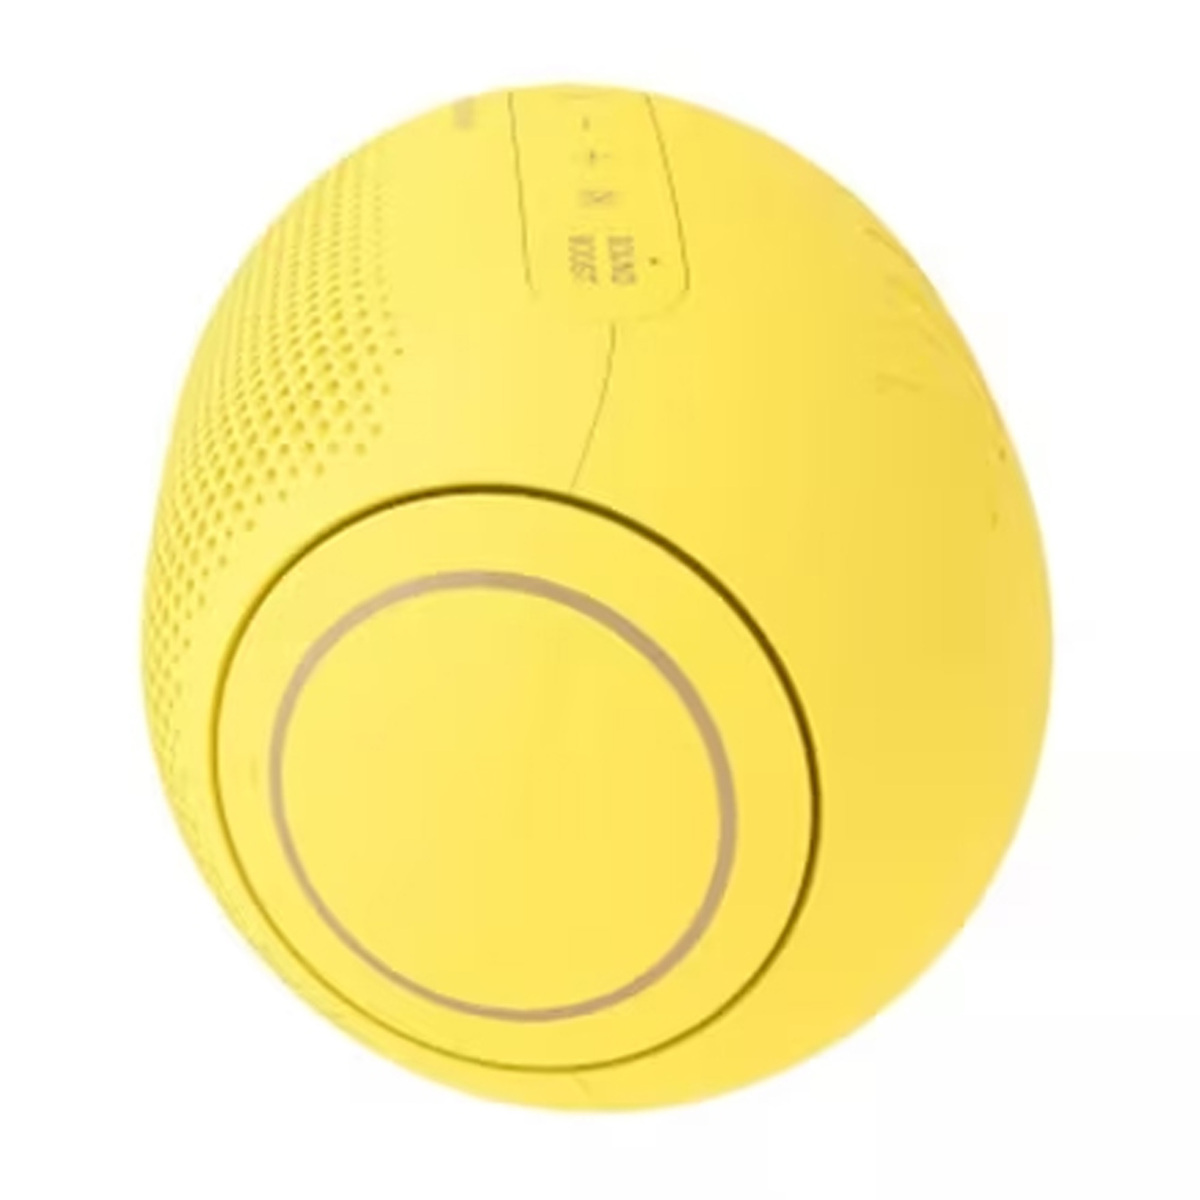 LG XBOOM Go Jellybean Portable Bluetooth Speaker, Sour Lemon (Yellow), PL2S